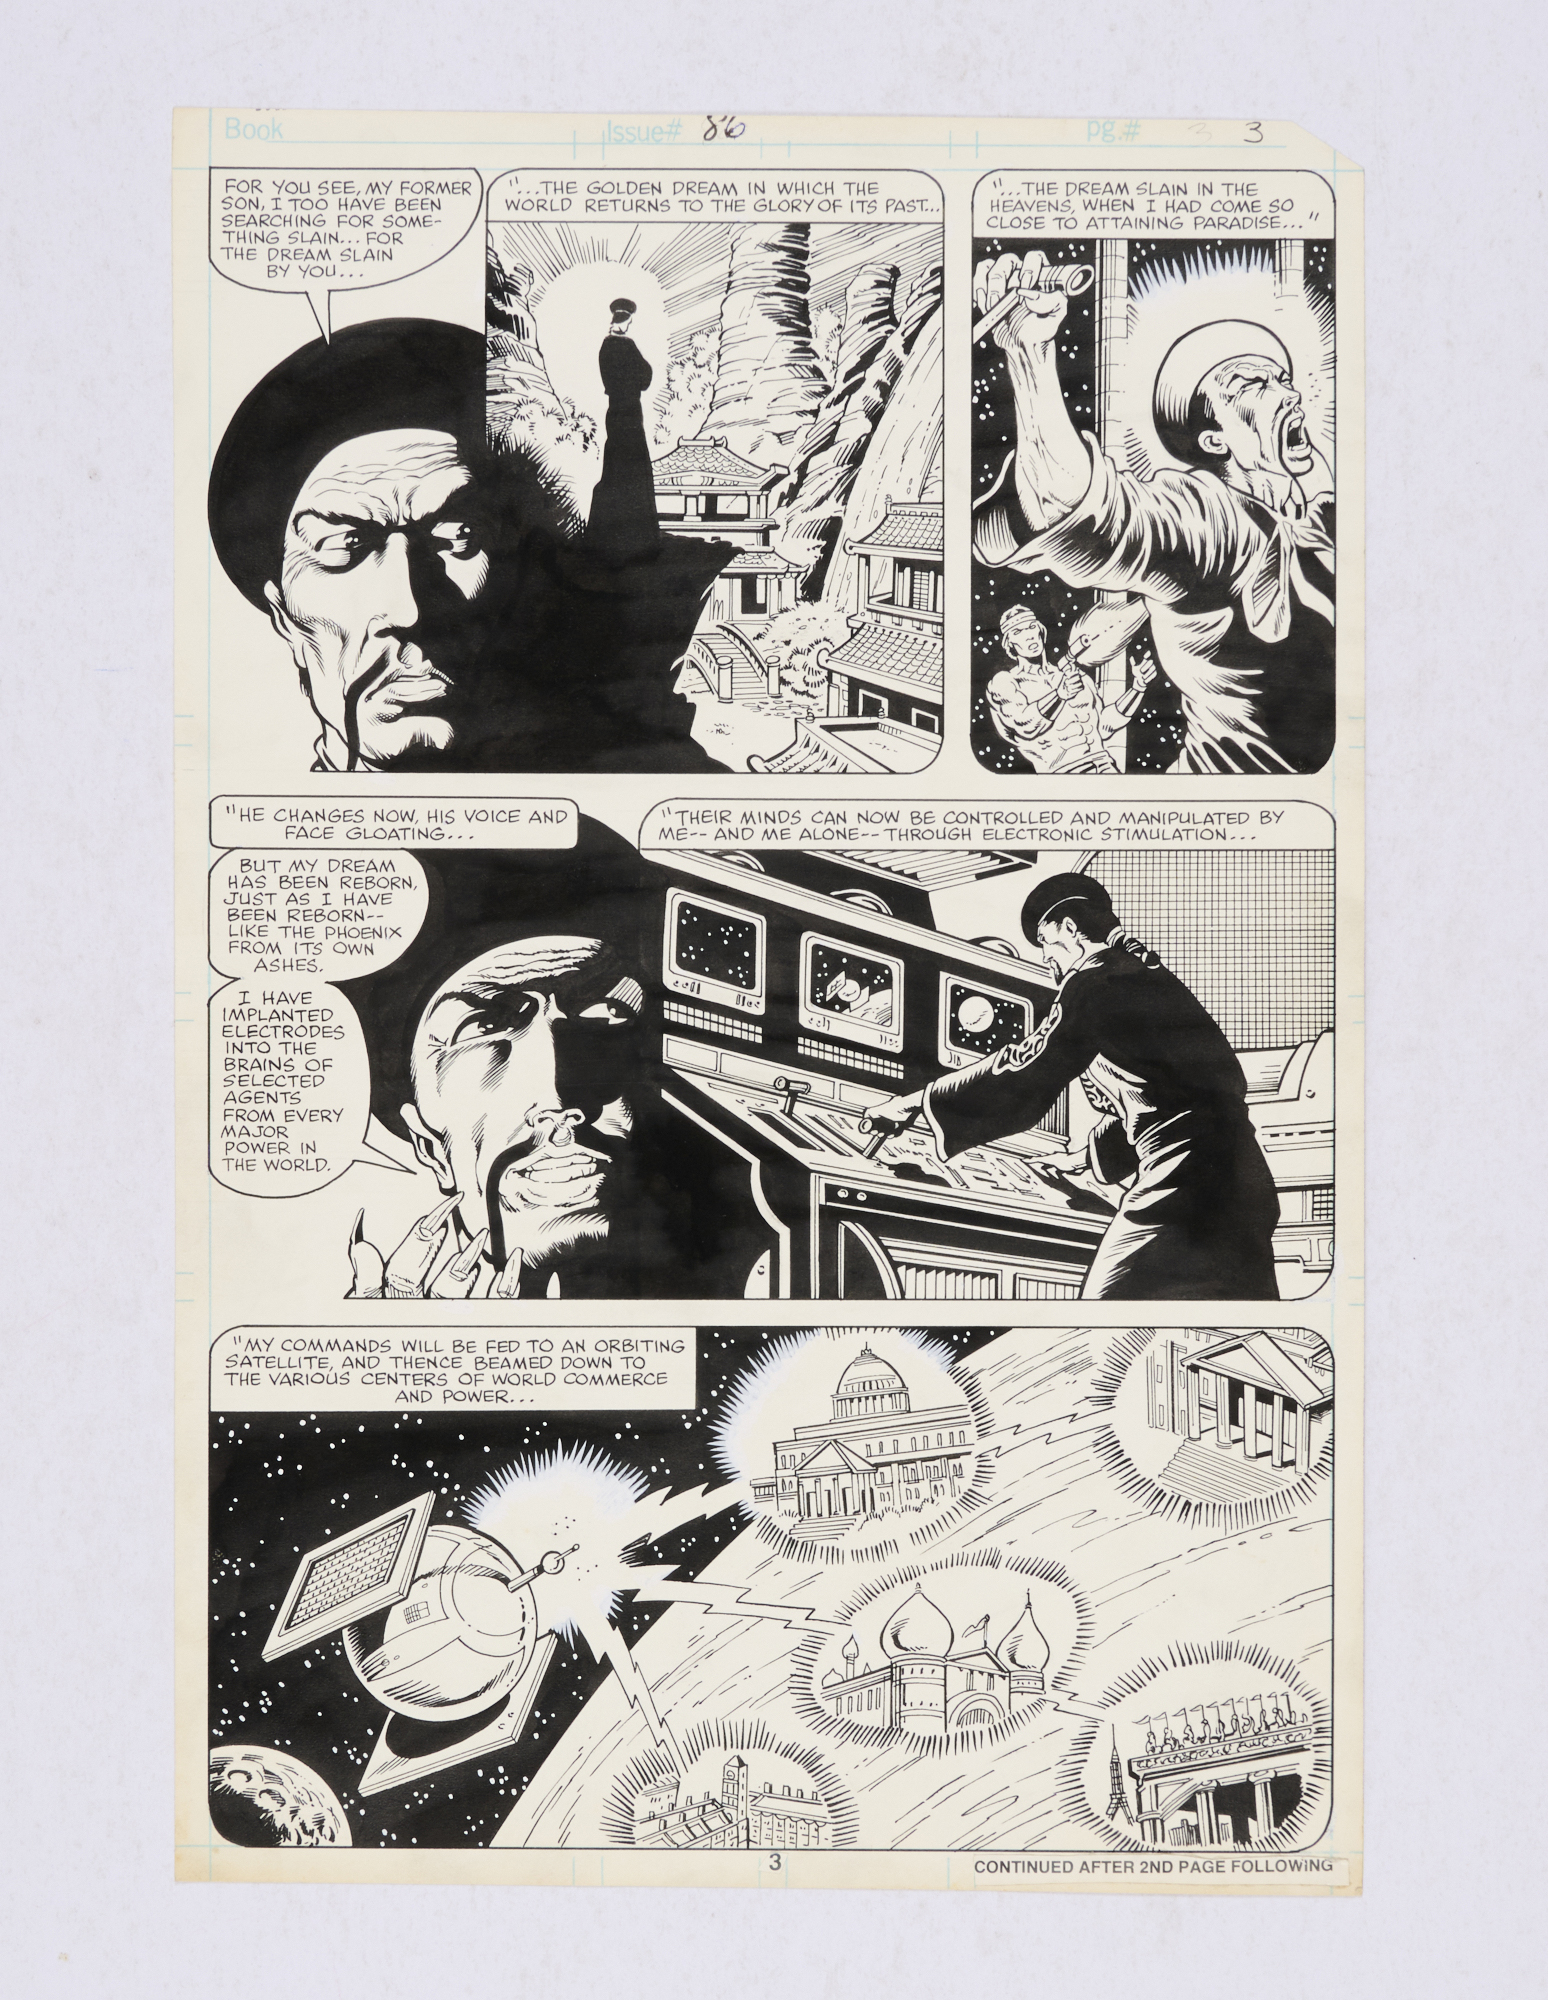 Master of Kung Fu # 86 pg 3 original artwork (1980) by Mike Zeck and Gene Day. Indian ink on card.